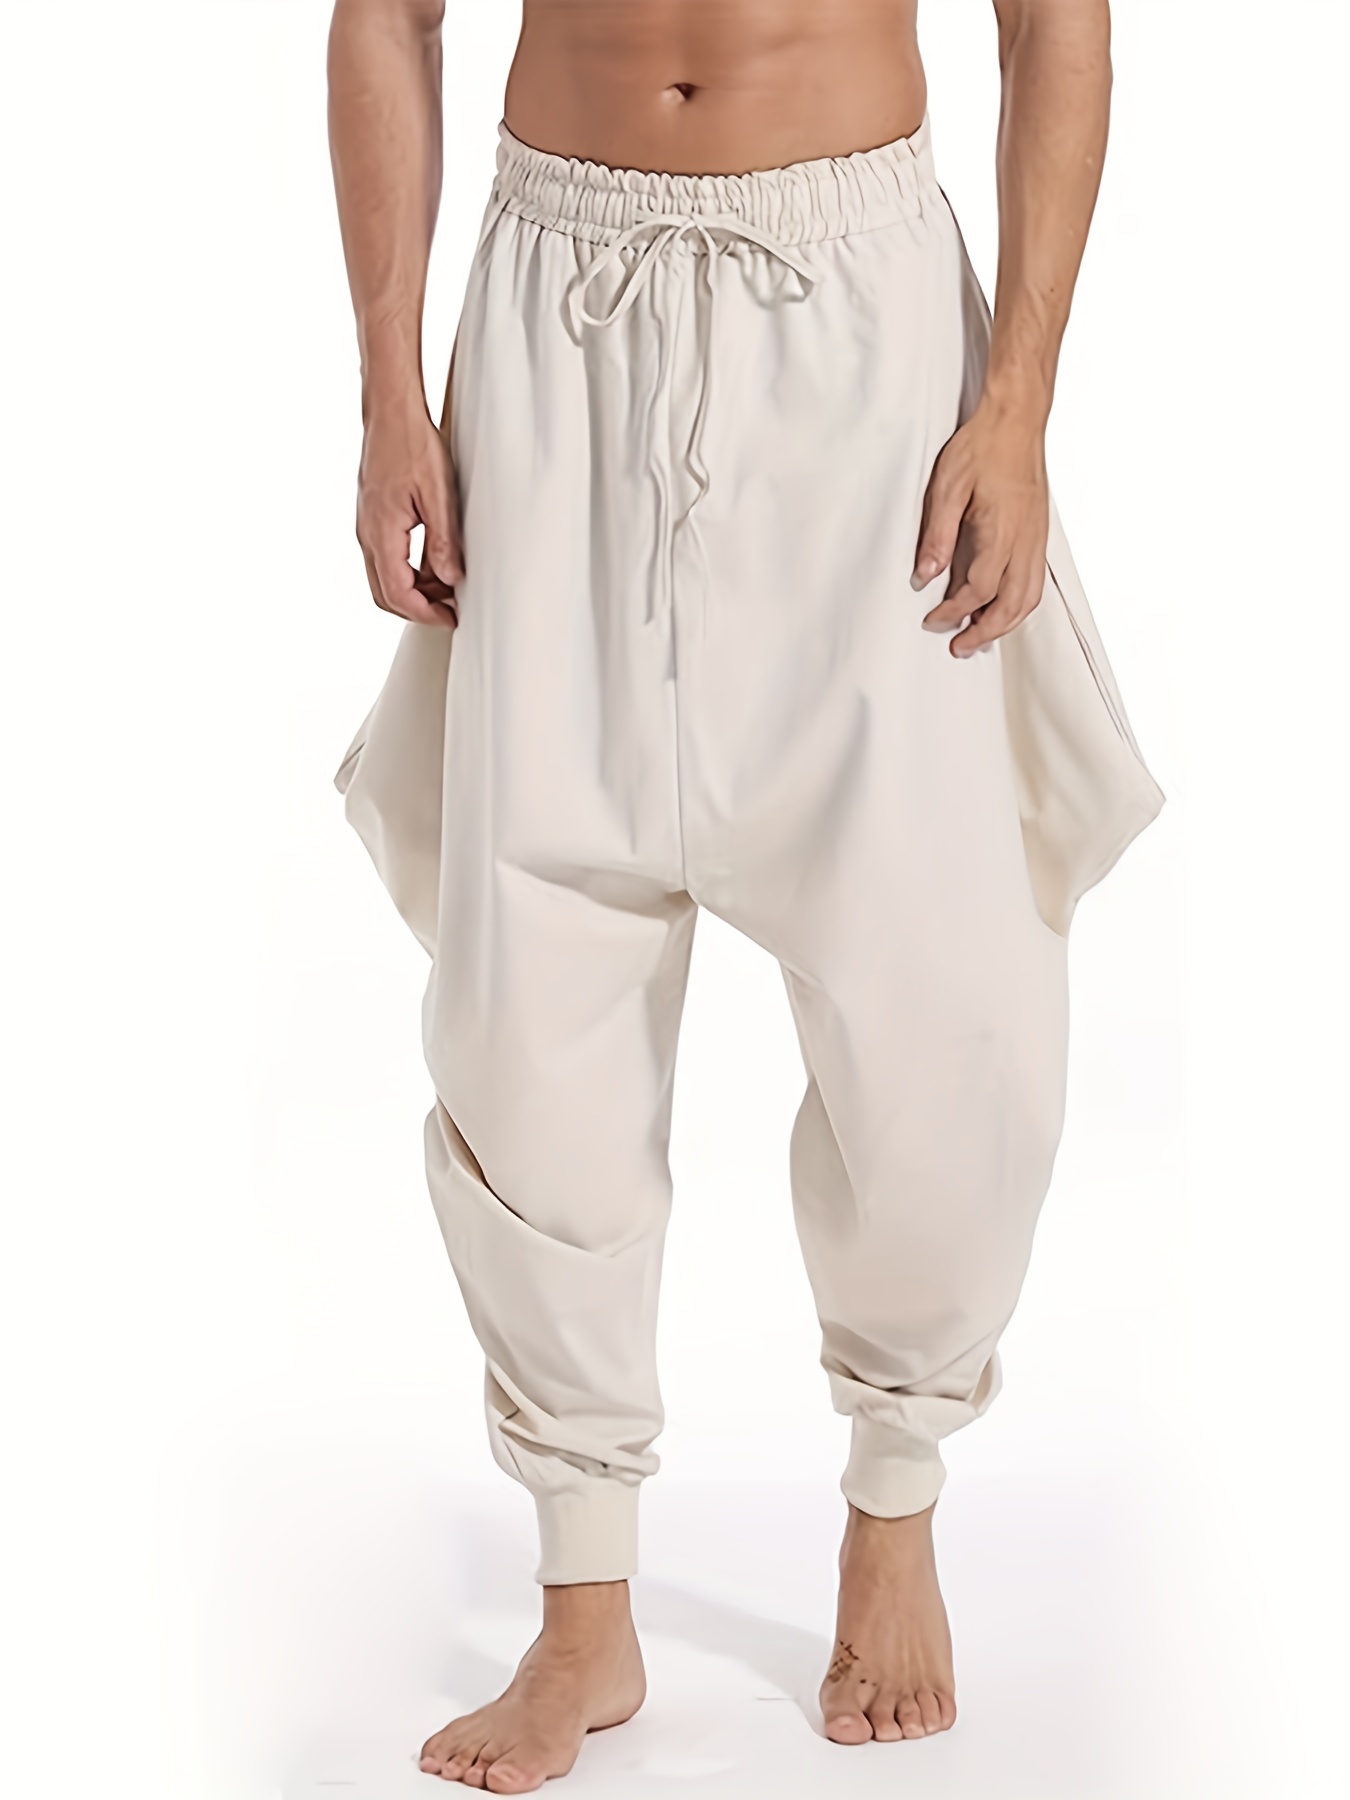 Floral Print Harem Trousers Yoga Pants Bohemian Boho Style - Etsy Australia